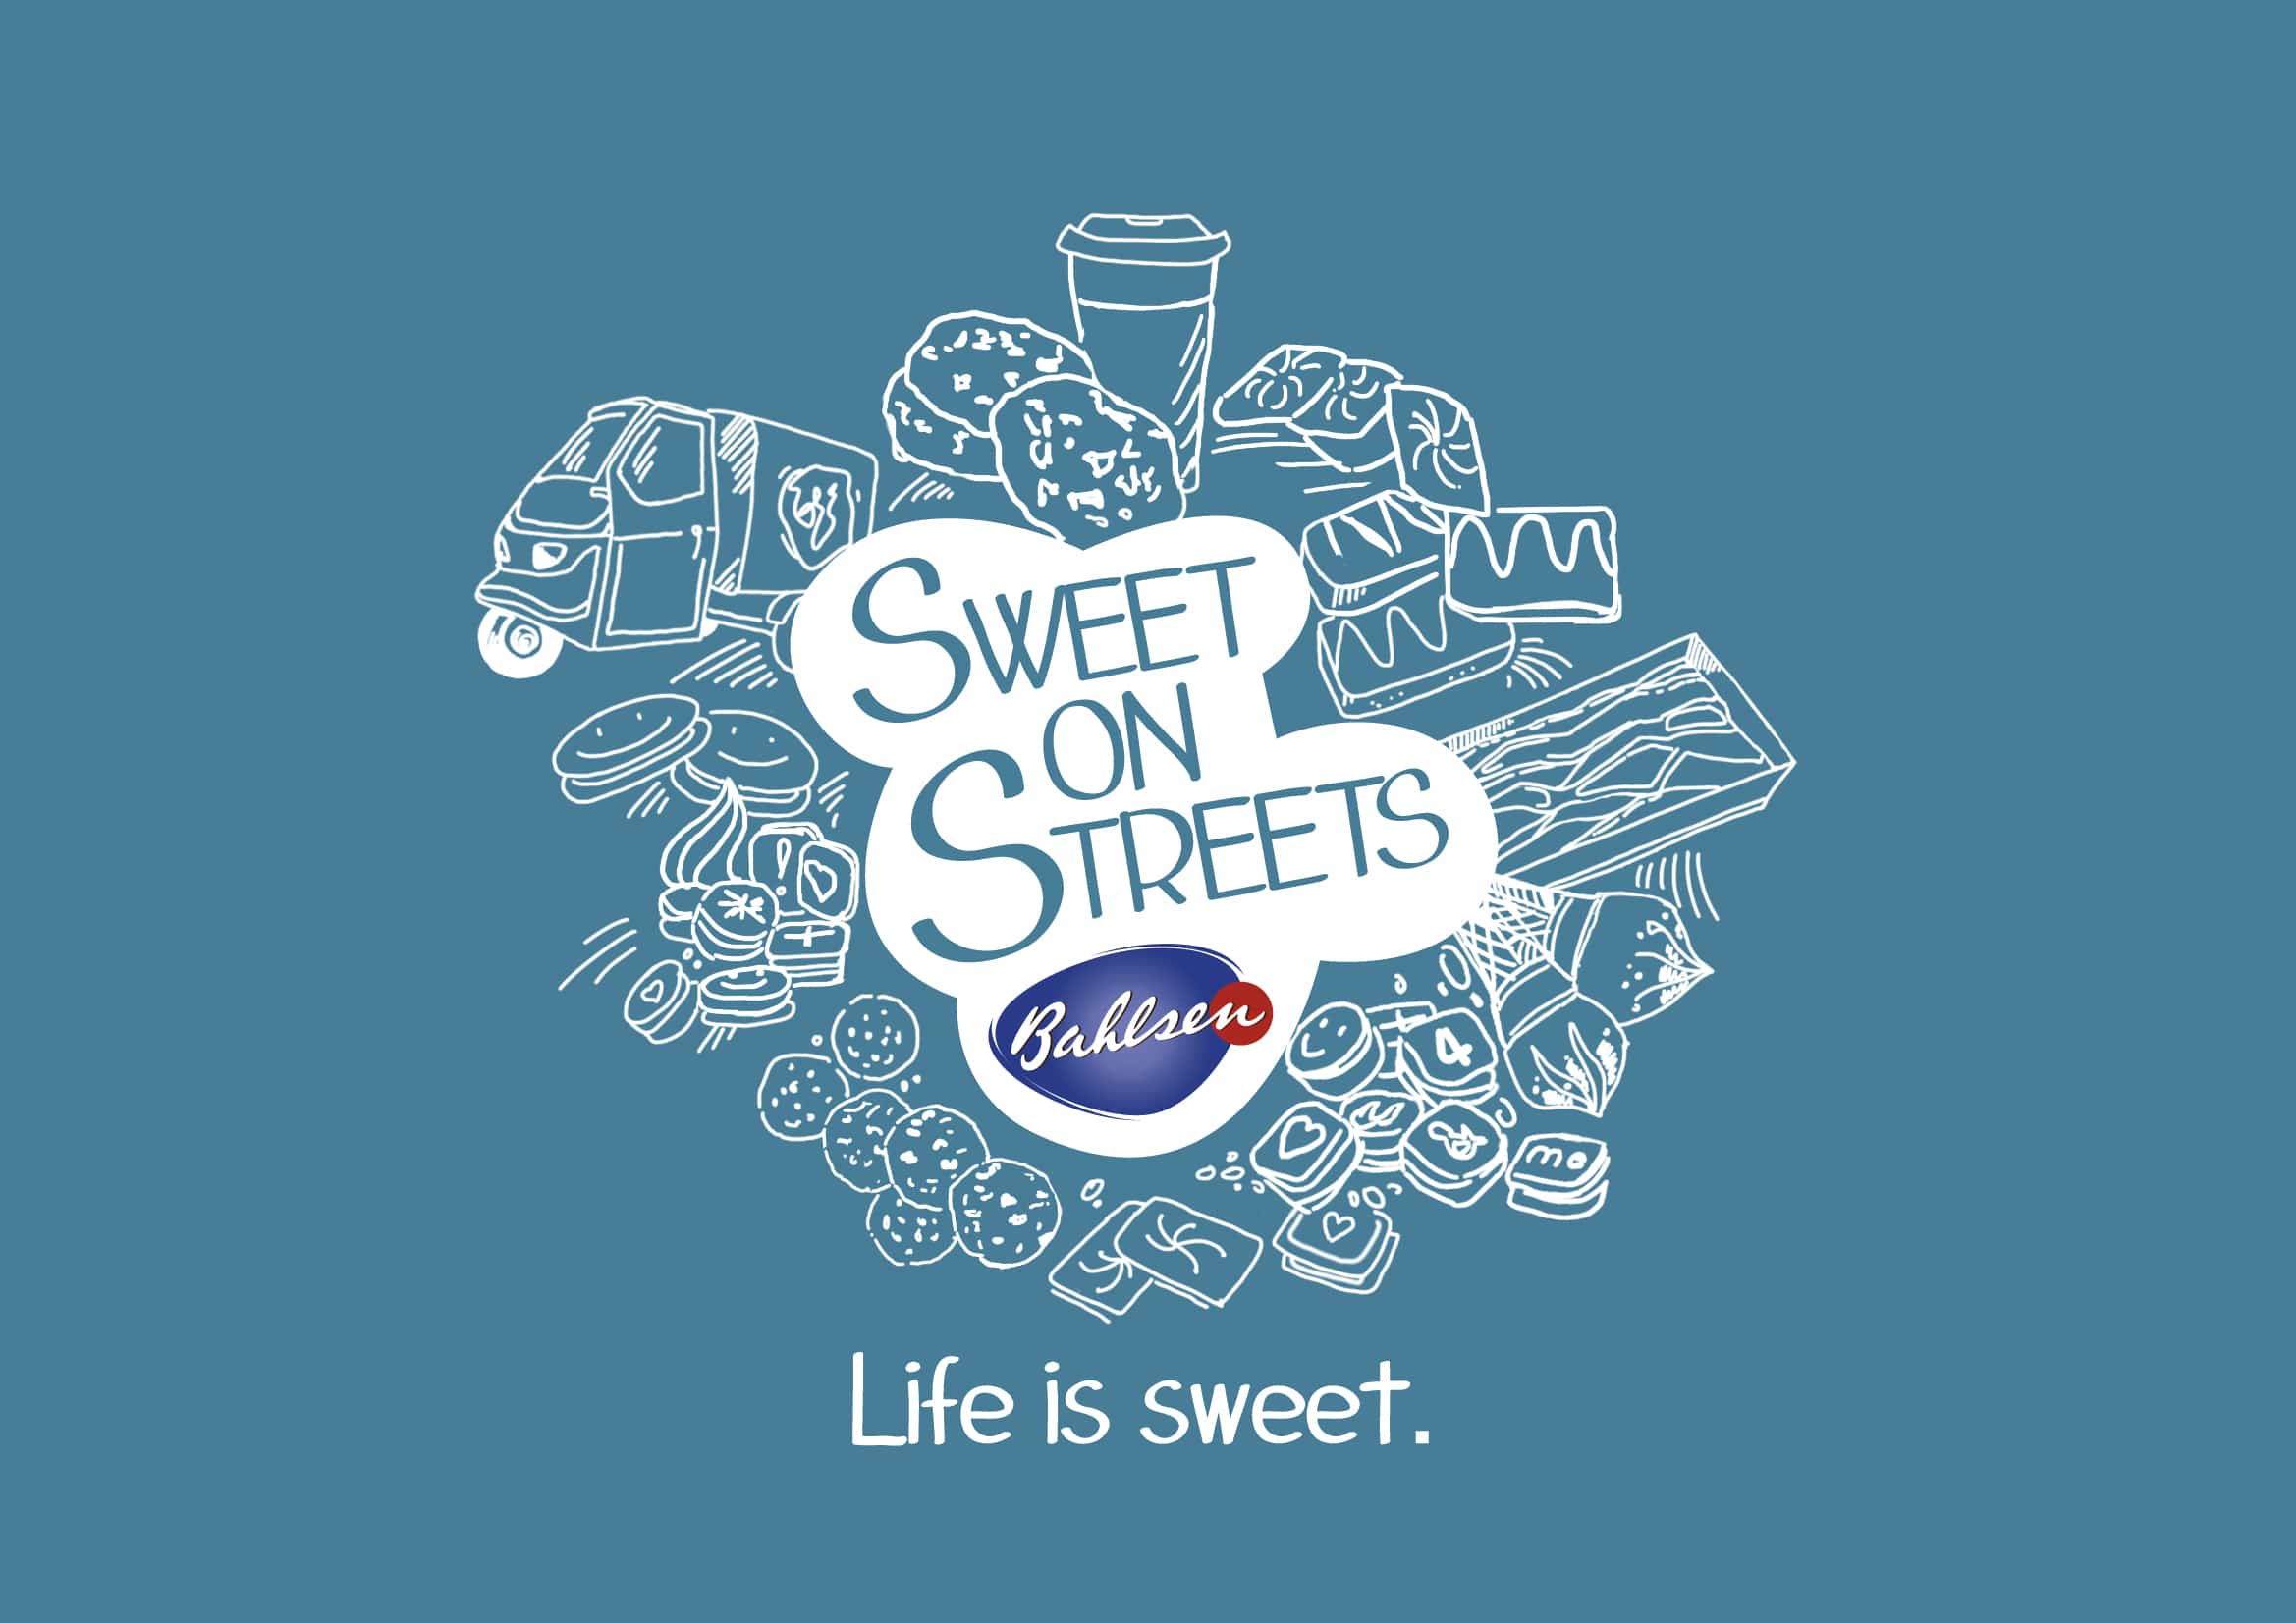 Sweet on Streets Tour von Bahlsen